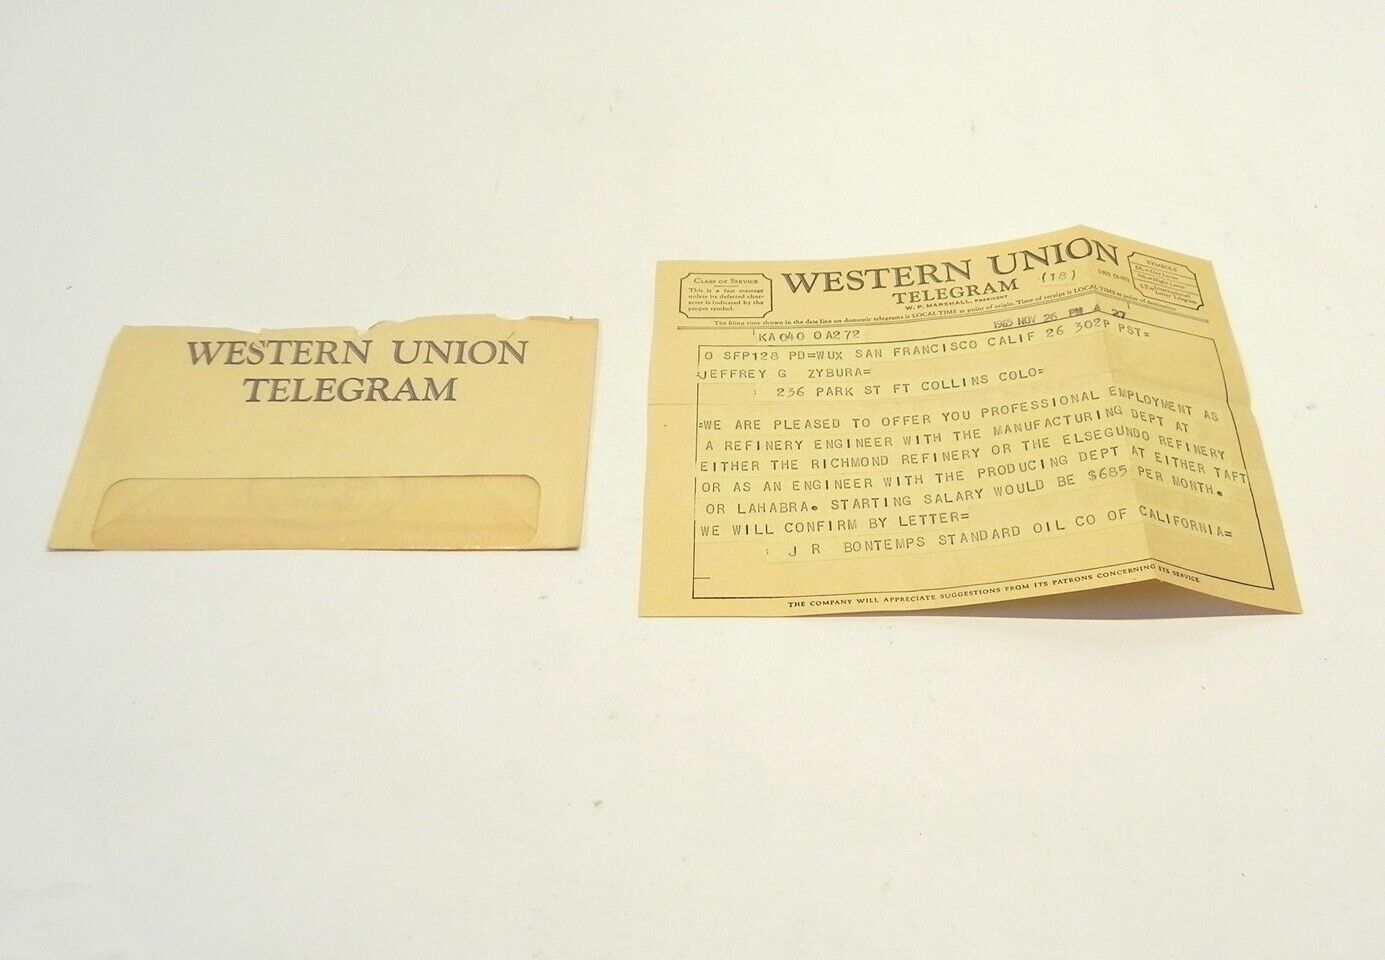 VINTAGE 1965 WESTERN UNION TELEGRAM RECRUITING REFINERY ENGINNER PRE-OWNED 